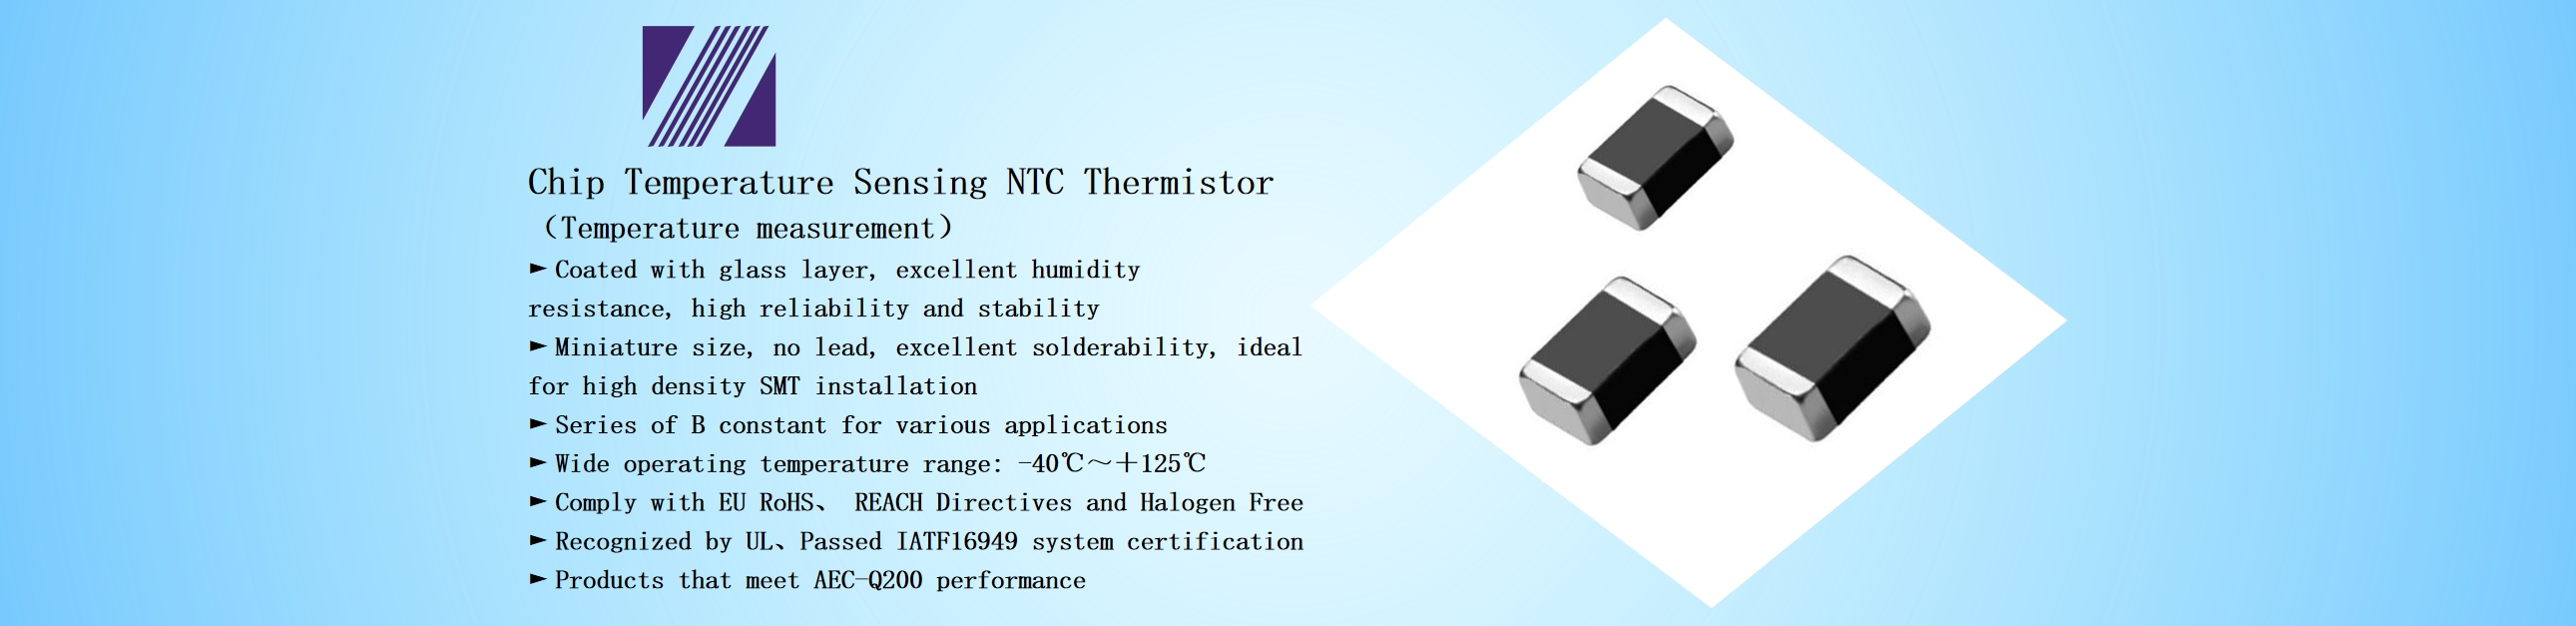 Chip Temperature Sensing NTC Thermistor